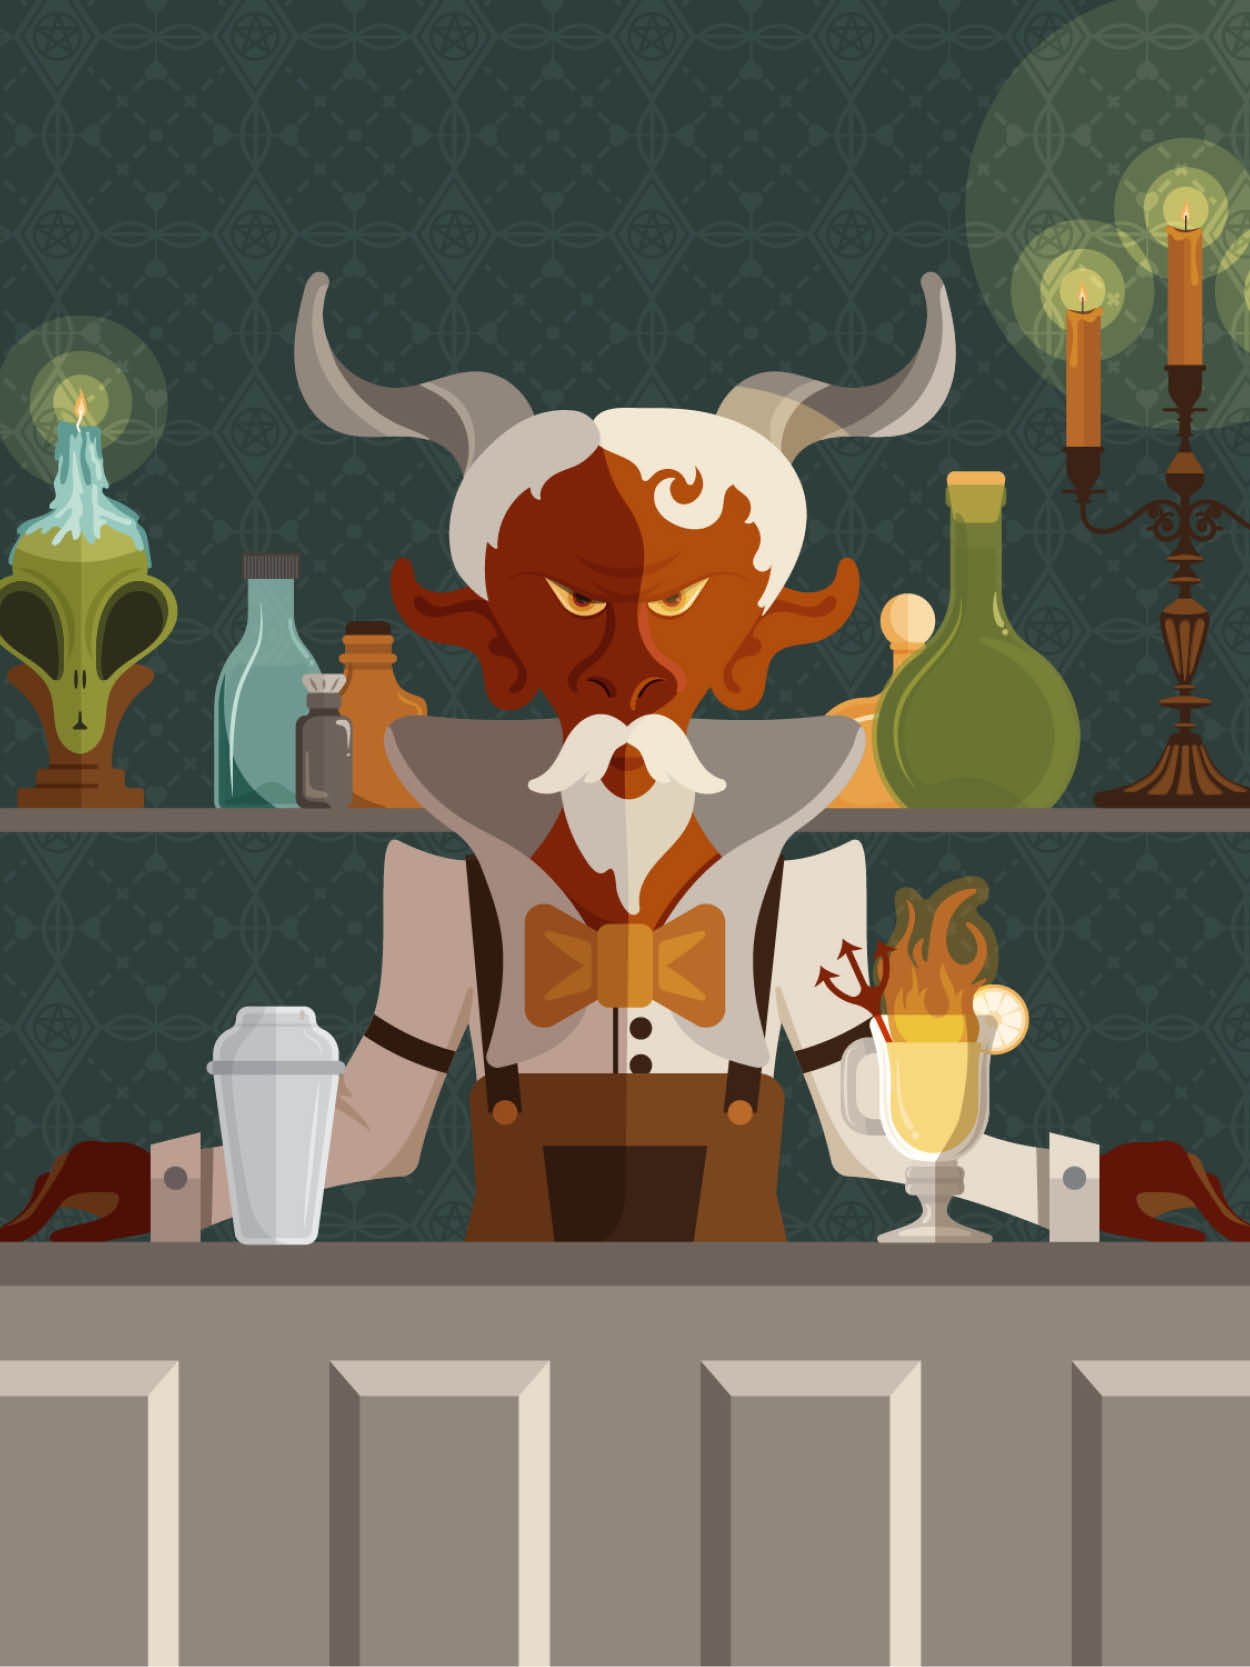 Devilish-Bartender-Sci-Fi-Fantasy-Illustration-by-Amanda-Weedmark.jpg